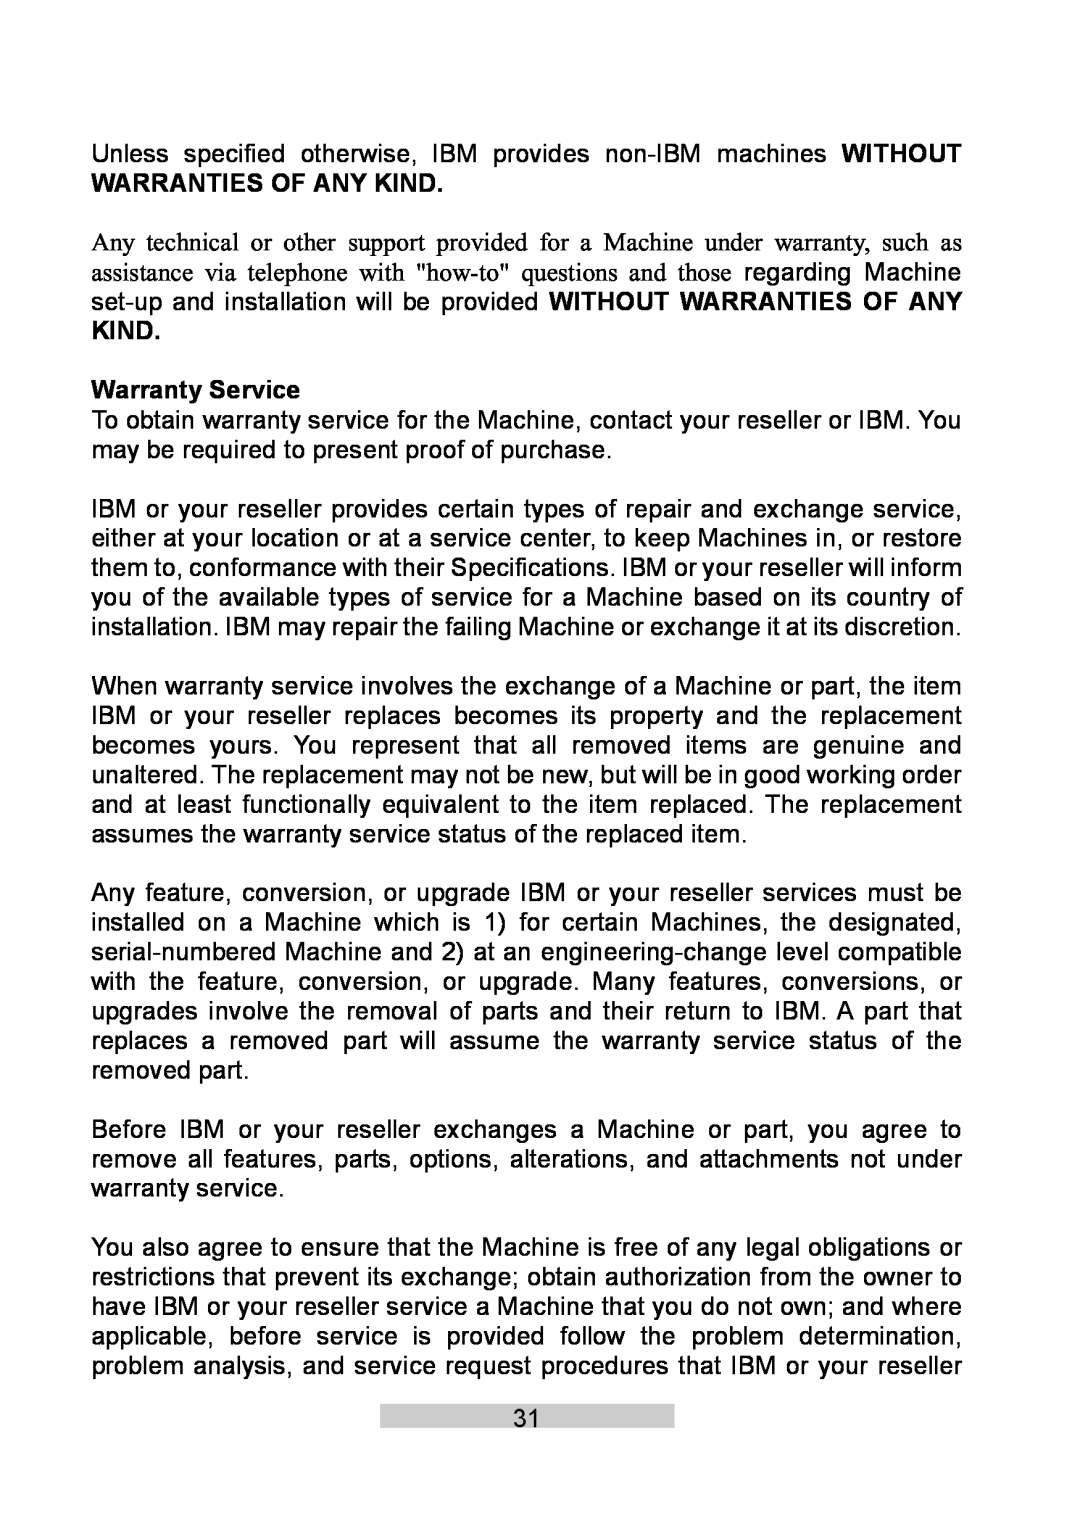 IBM T86A system manual Warranties Of Any Kind, KIND Warranty Service 